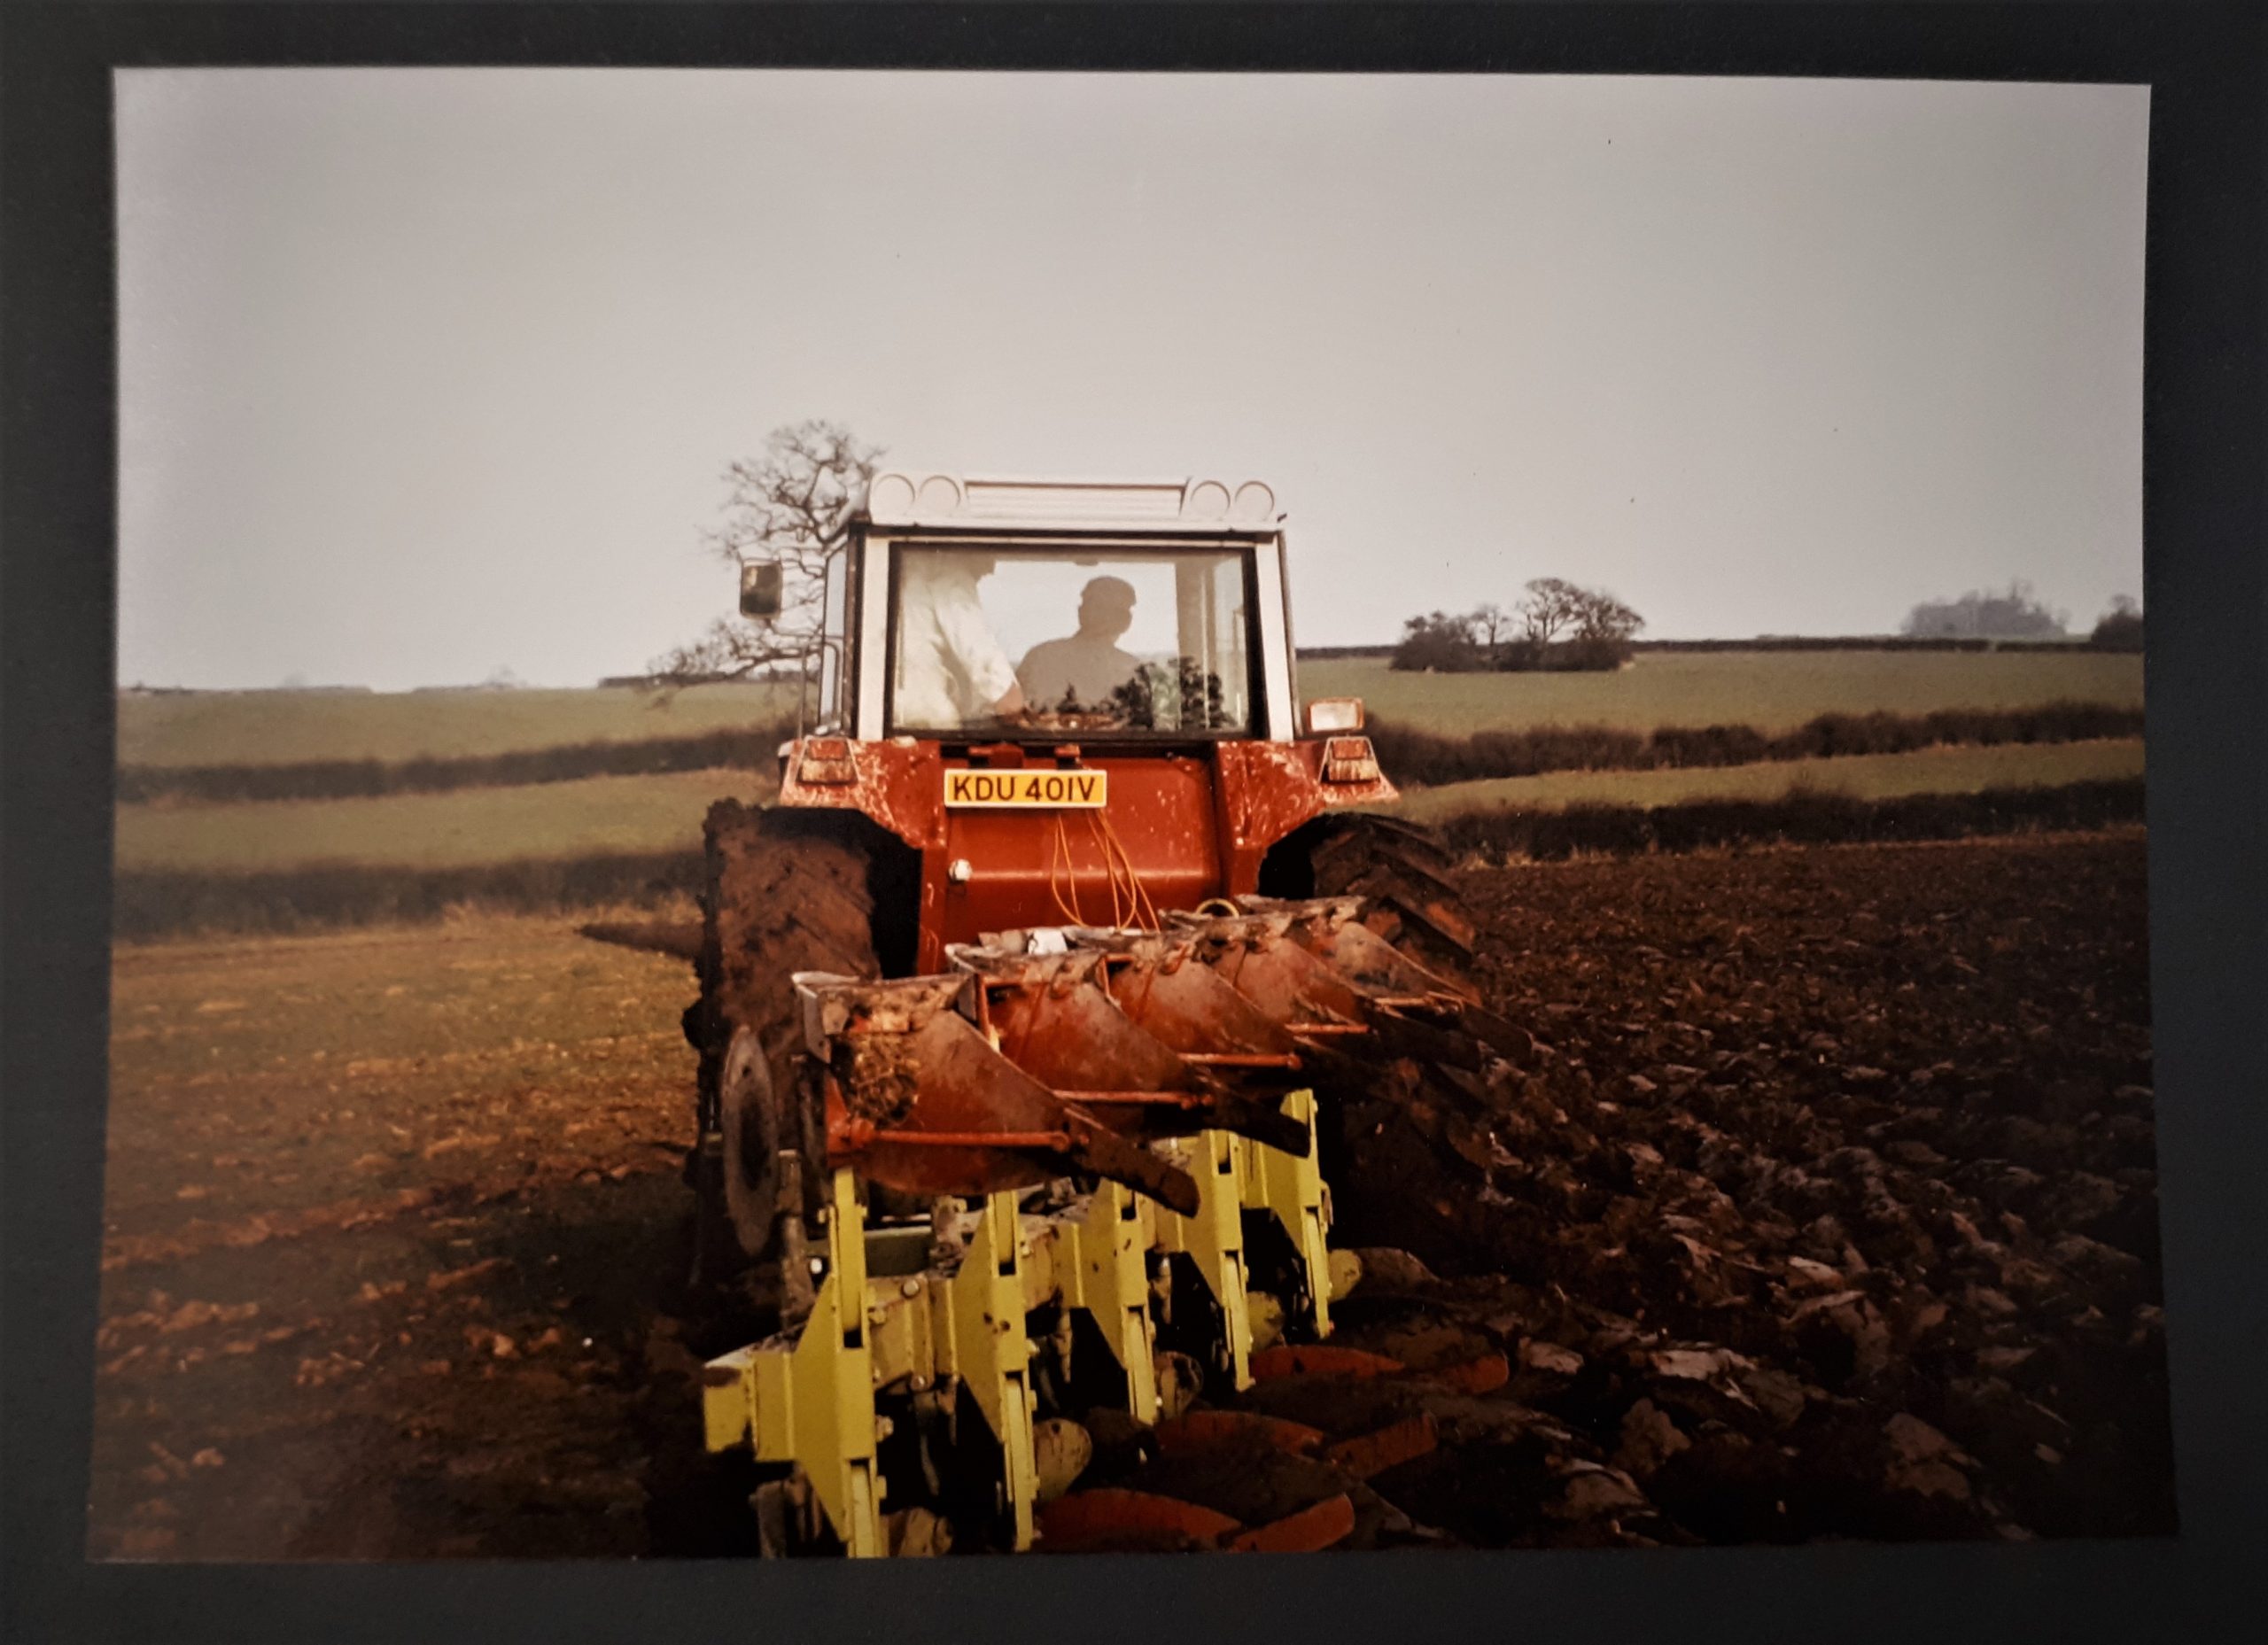 120 H.P. Tractor Ploughing Patchett's Farm, Tardebigge Ref: 899.156 BA 1332 WPS 55320 © J. Wormington Esq.